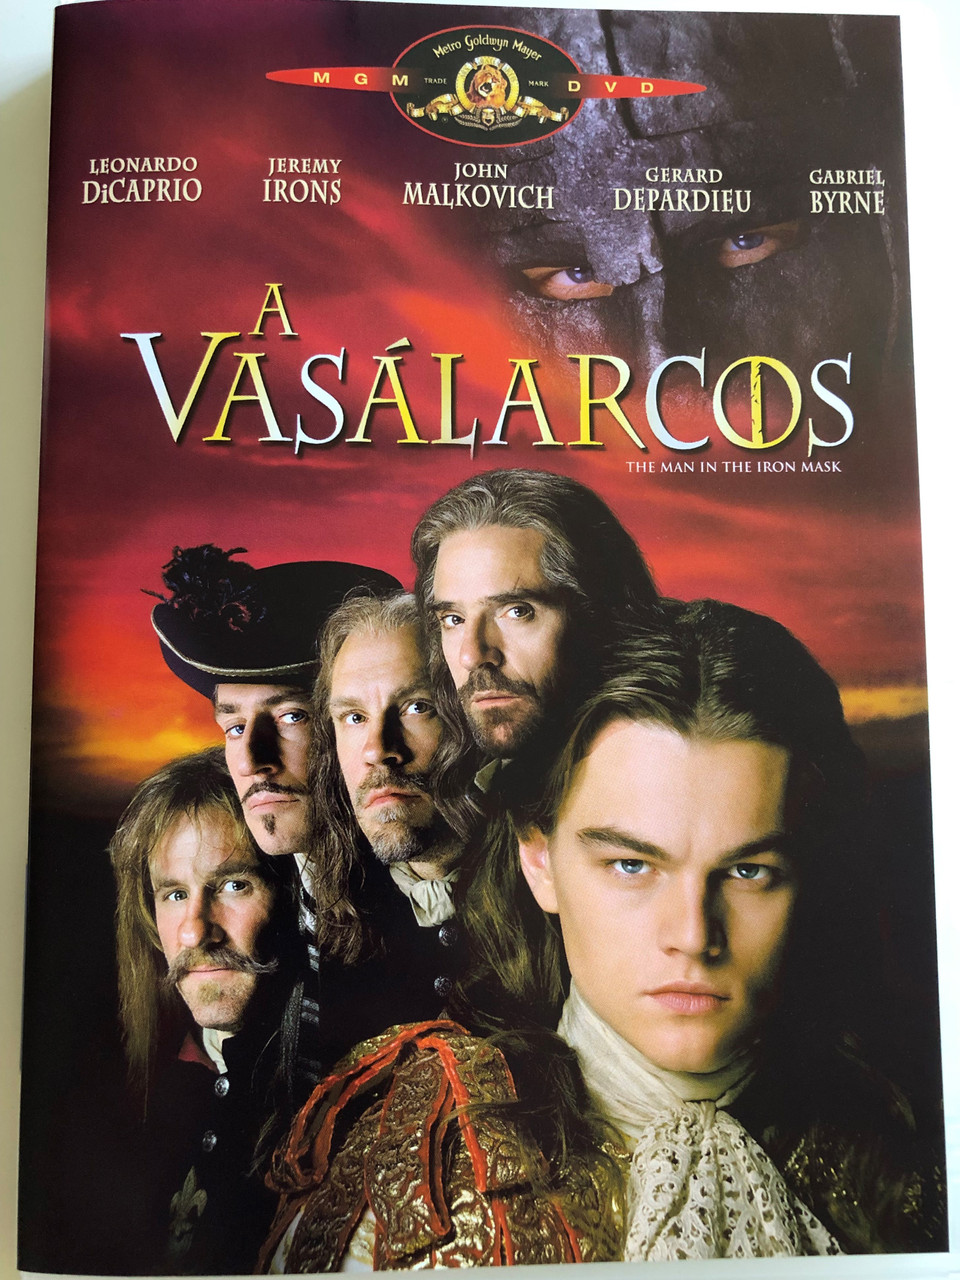 The Man in the Iron mask DVD 1998 A Vasálarcos / Directed by Randall  Wallace / Starring: Leonardo DiCaprio, Jeremy Irons, John Malkovich, Gerard  Depardieu - bibleinmylanguage